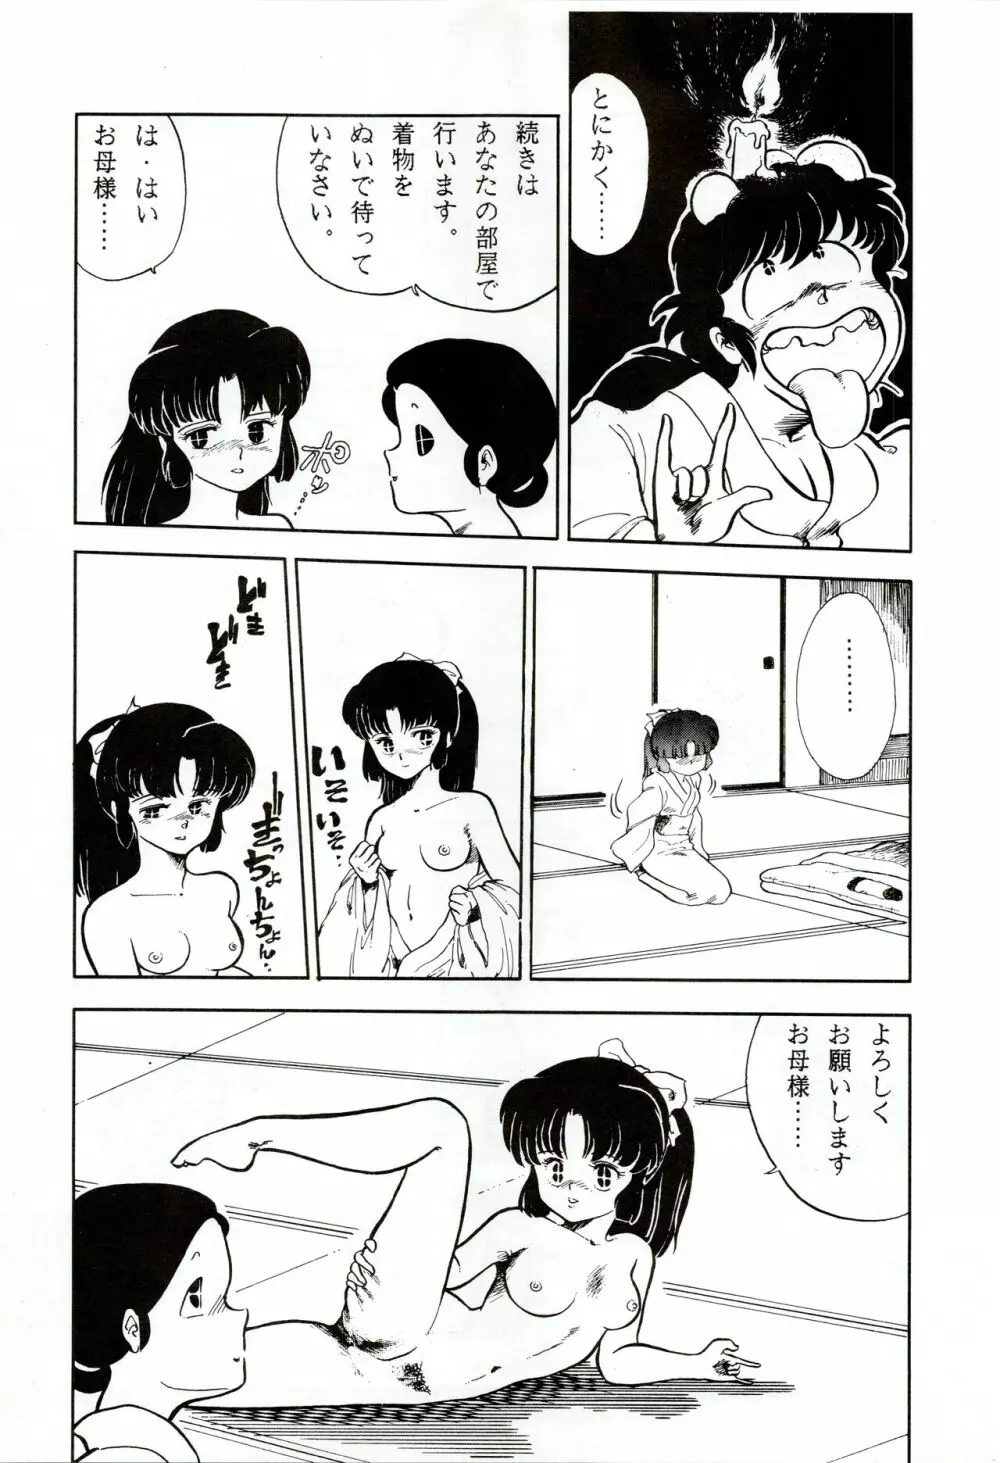 甲冑伝説 - page25